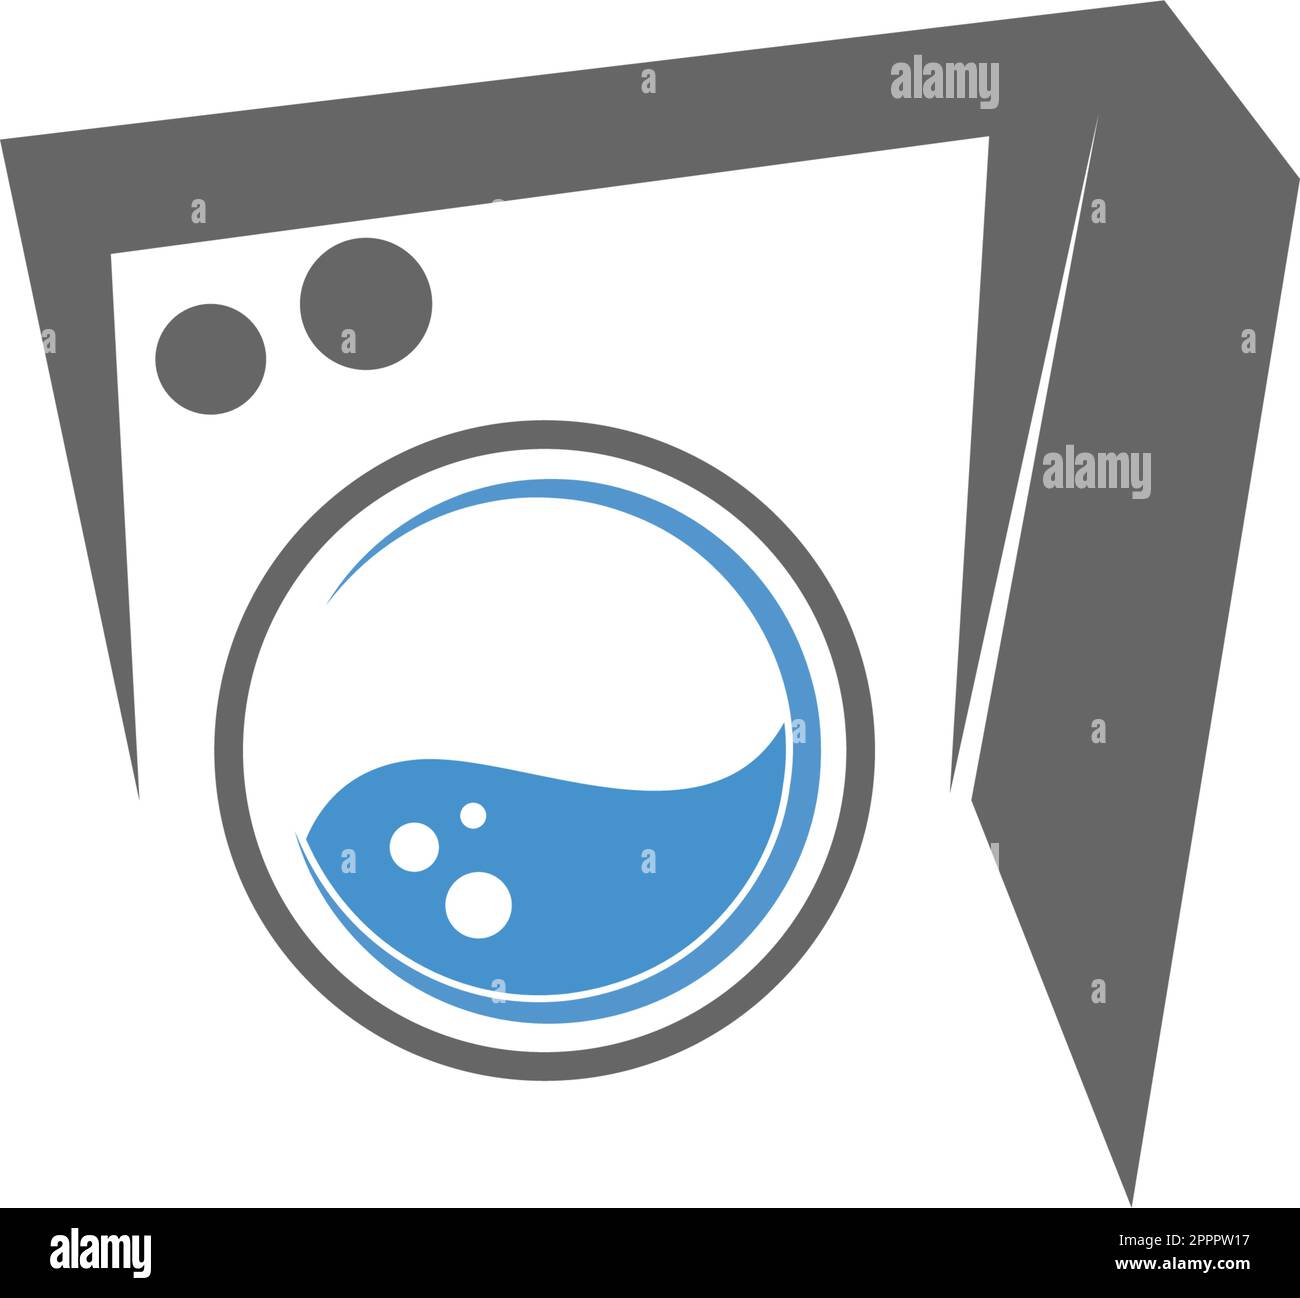 Laundry, clothes washing icon logo illustration Stock Vector